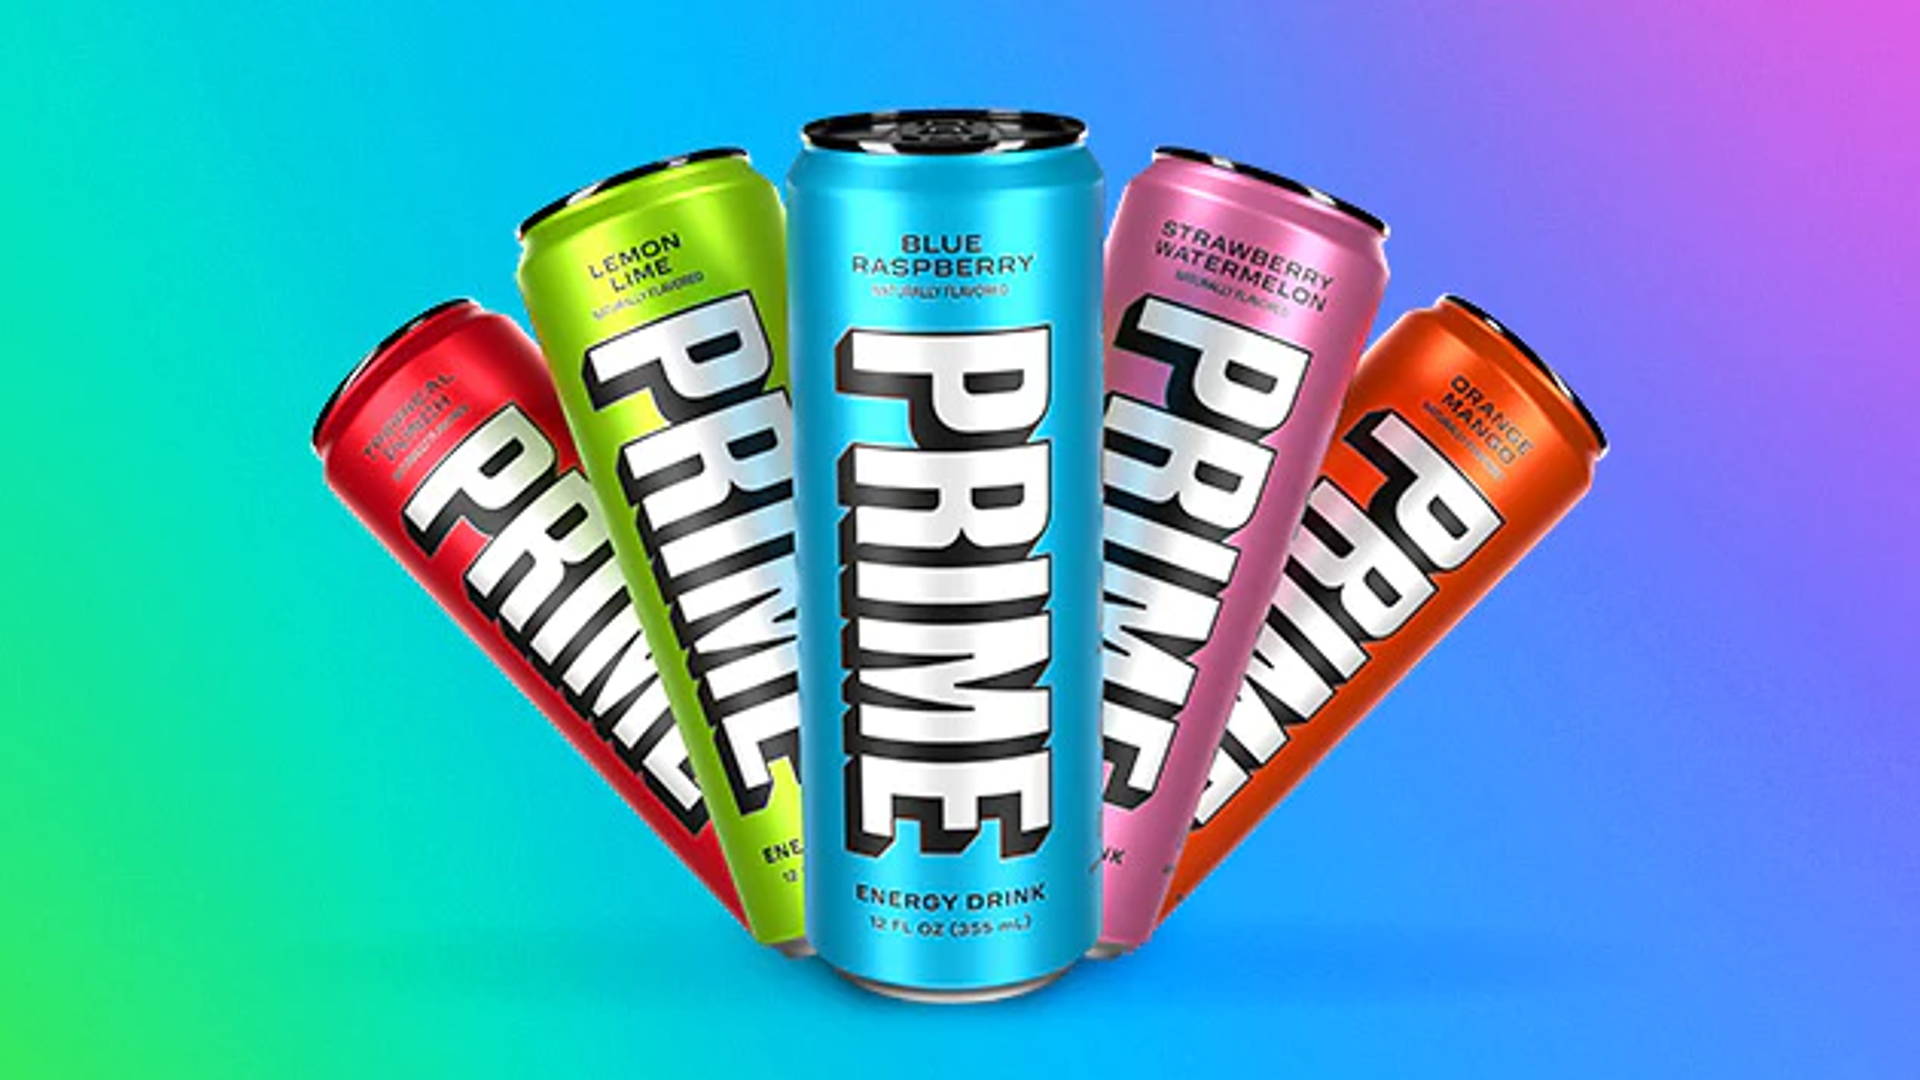 Logan Paul and KSI Launch Prime Energy. Dieline, Branding & Packaging Inspiration